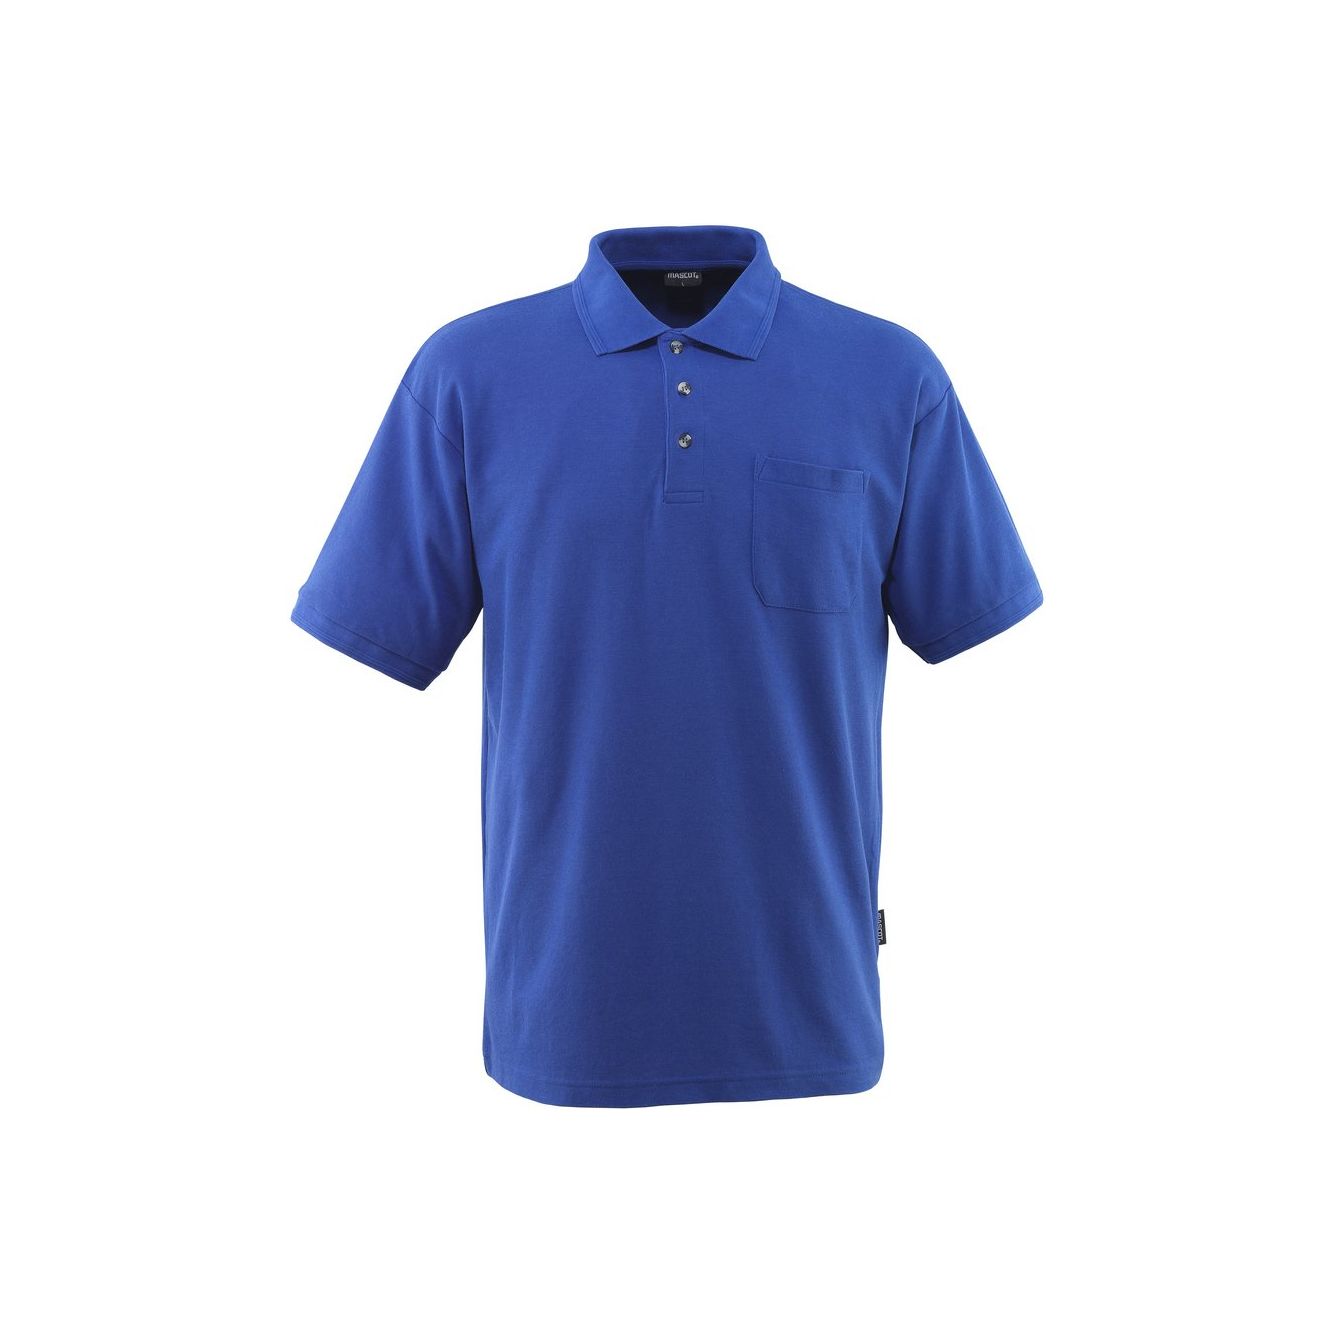 Mascot Borneo Polo Shirt Royal Blue 00783-260-11 Front